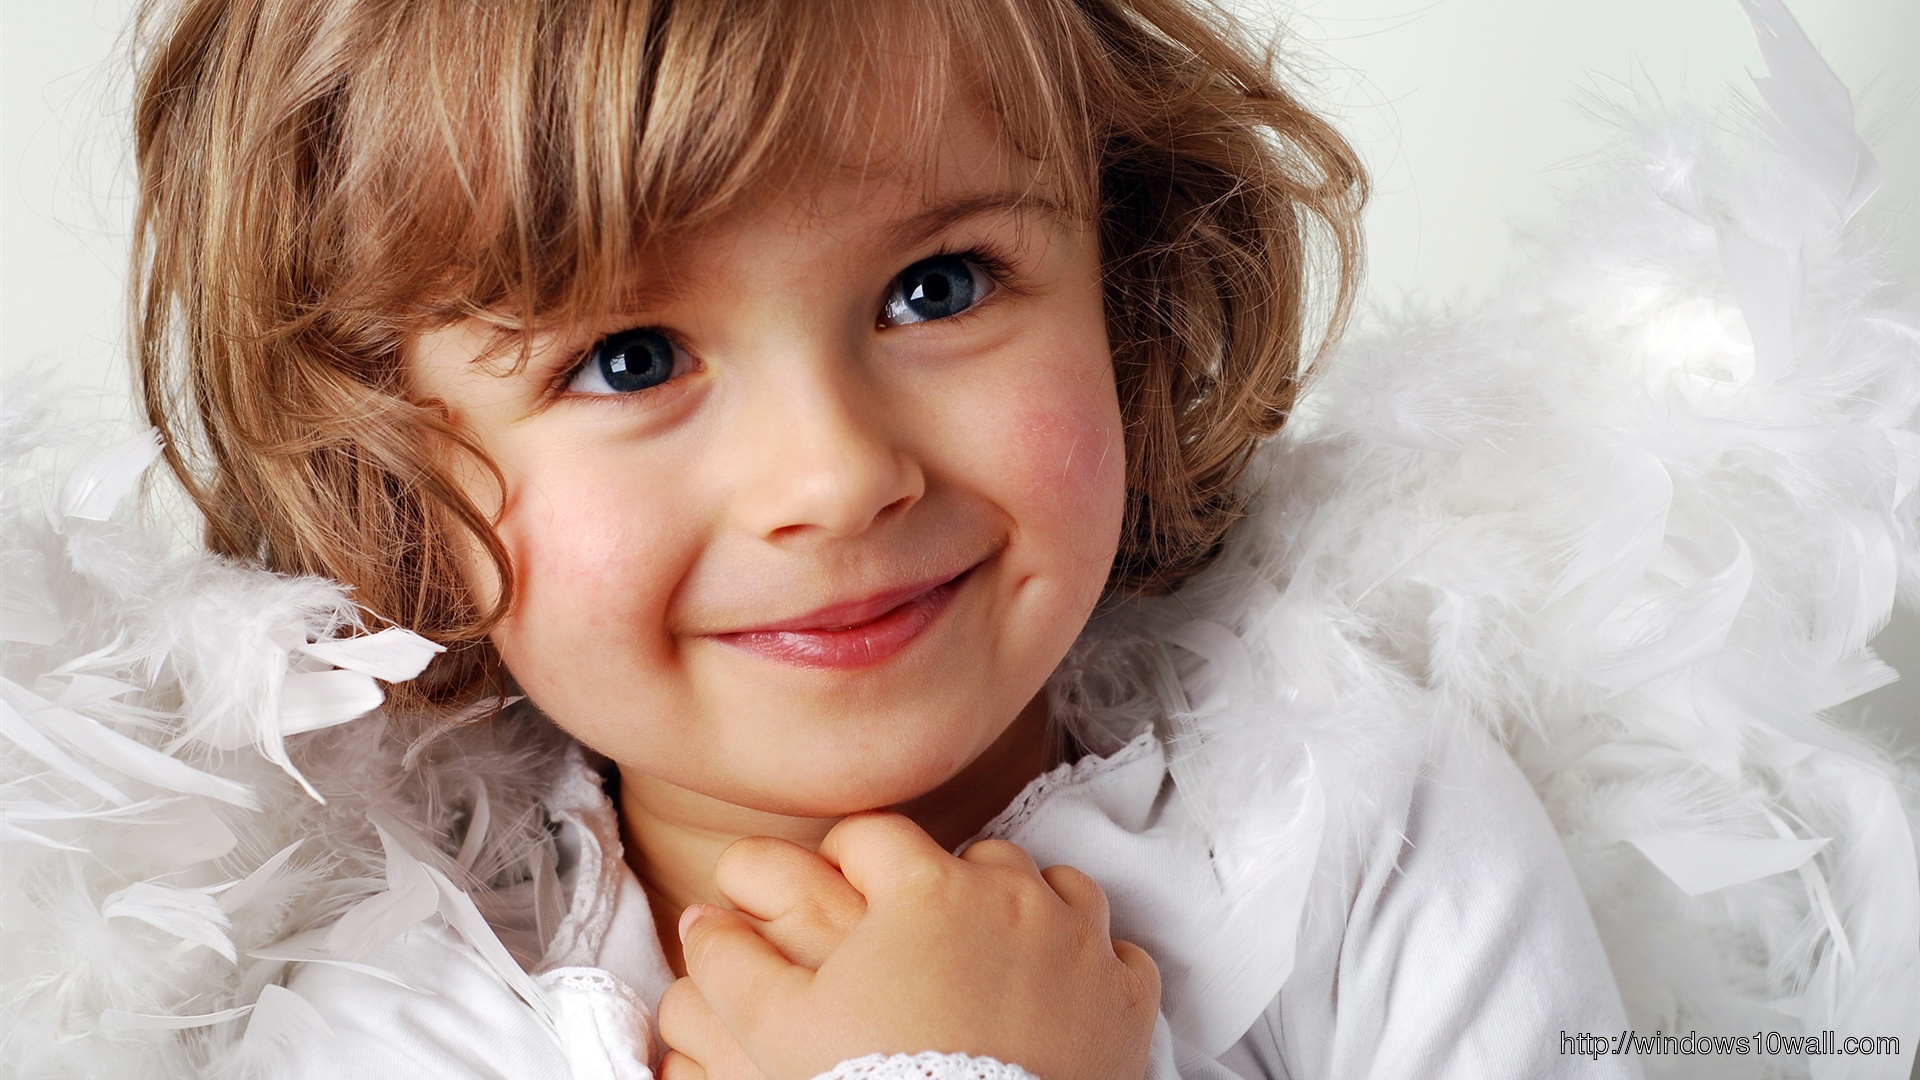 Cute little girl sweet smile Wallpapers